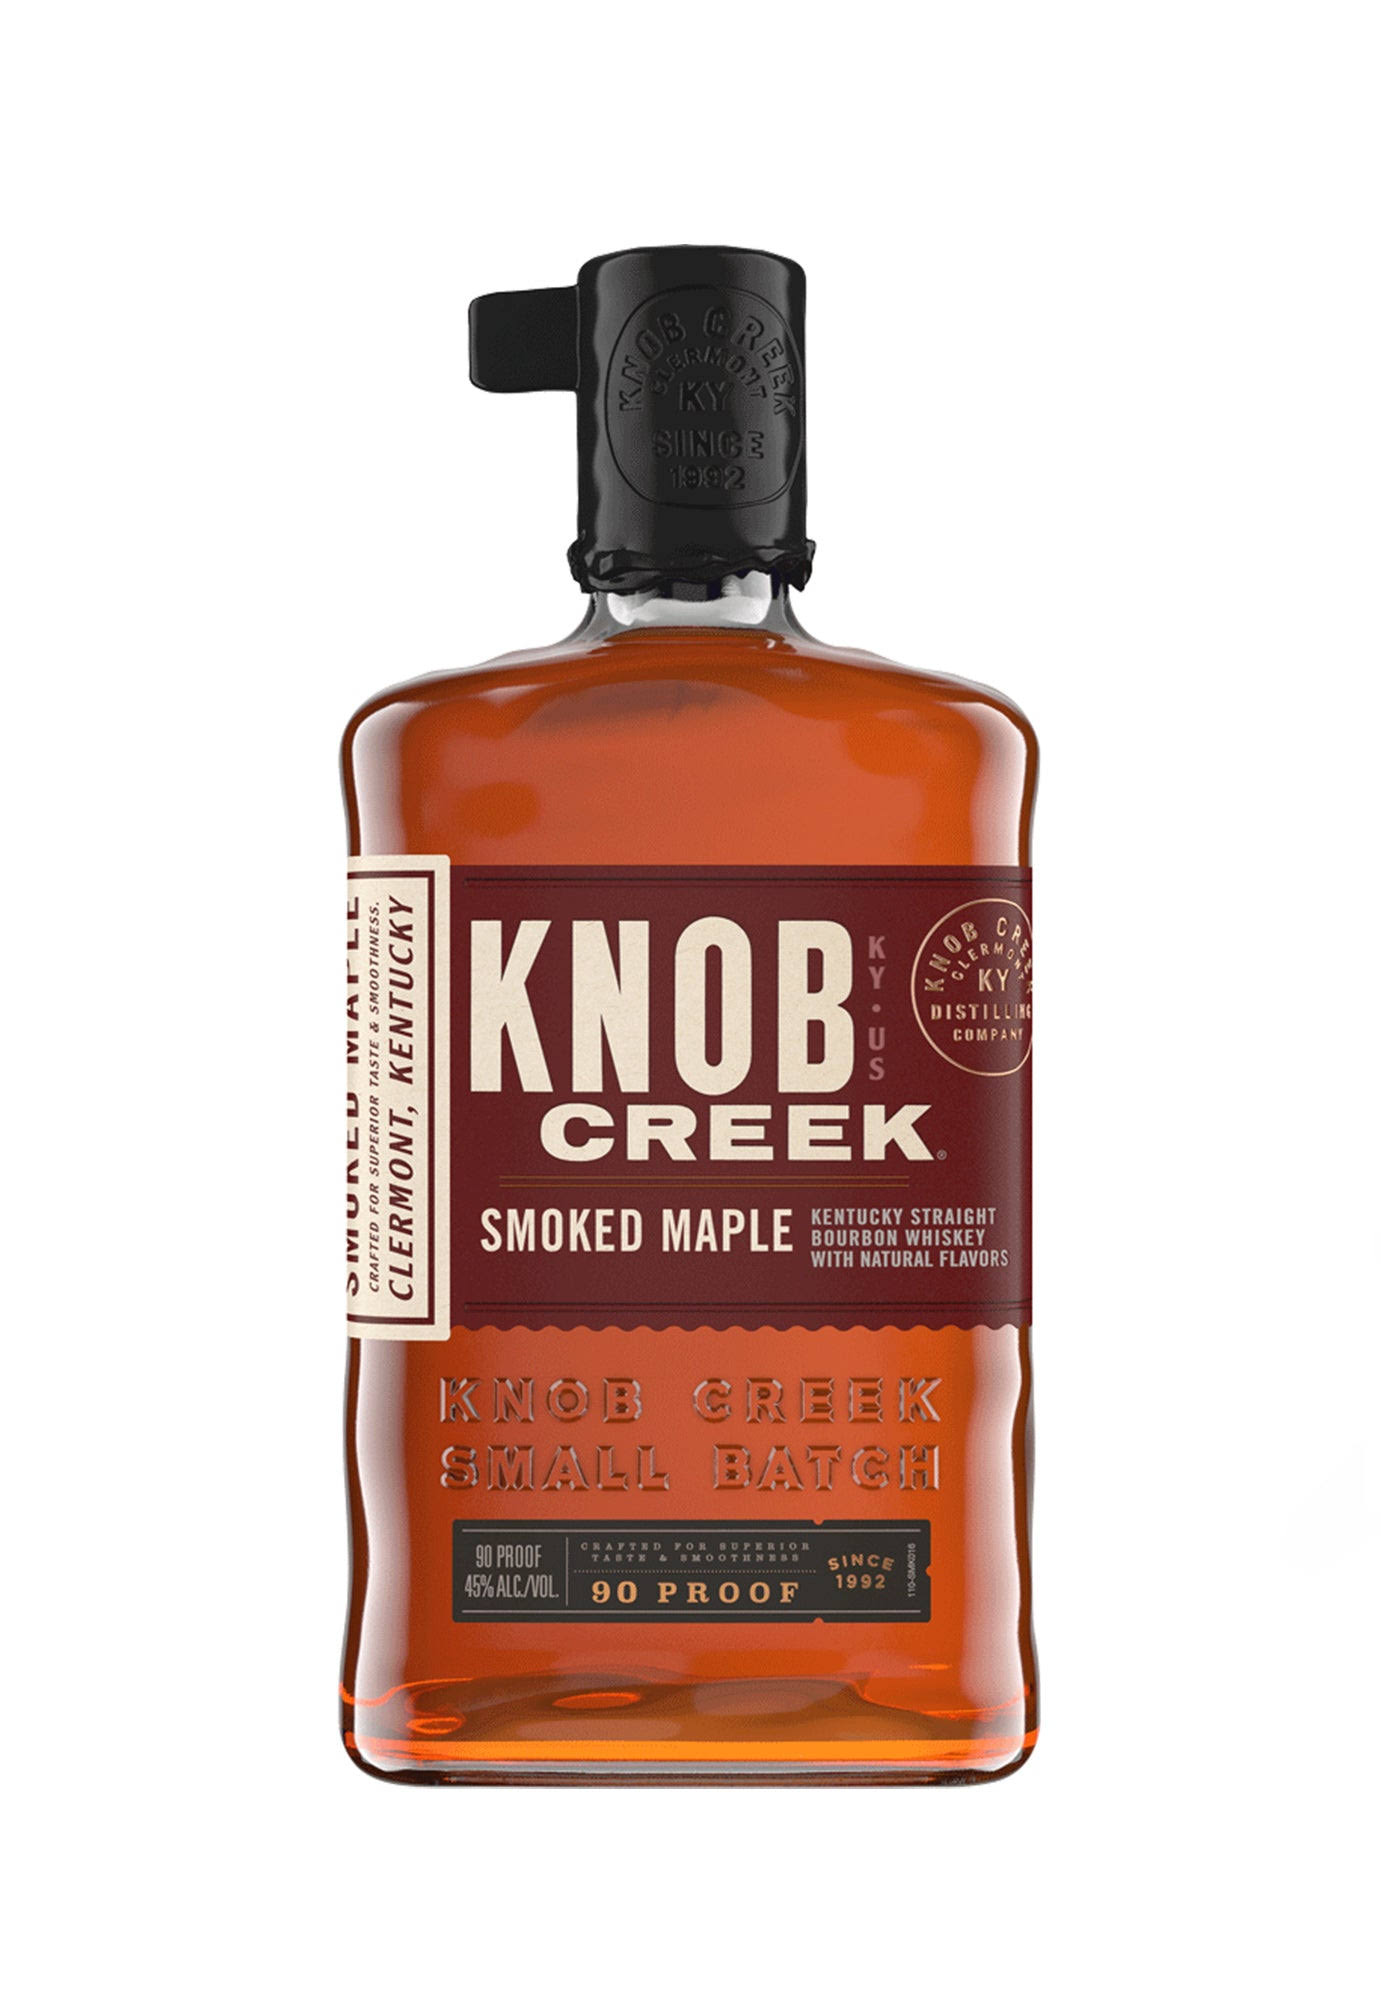 Knob Creek Bourbon Whiskey, Kentucky Straight, Smoked Maple - 750 ml